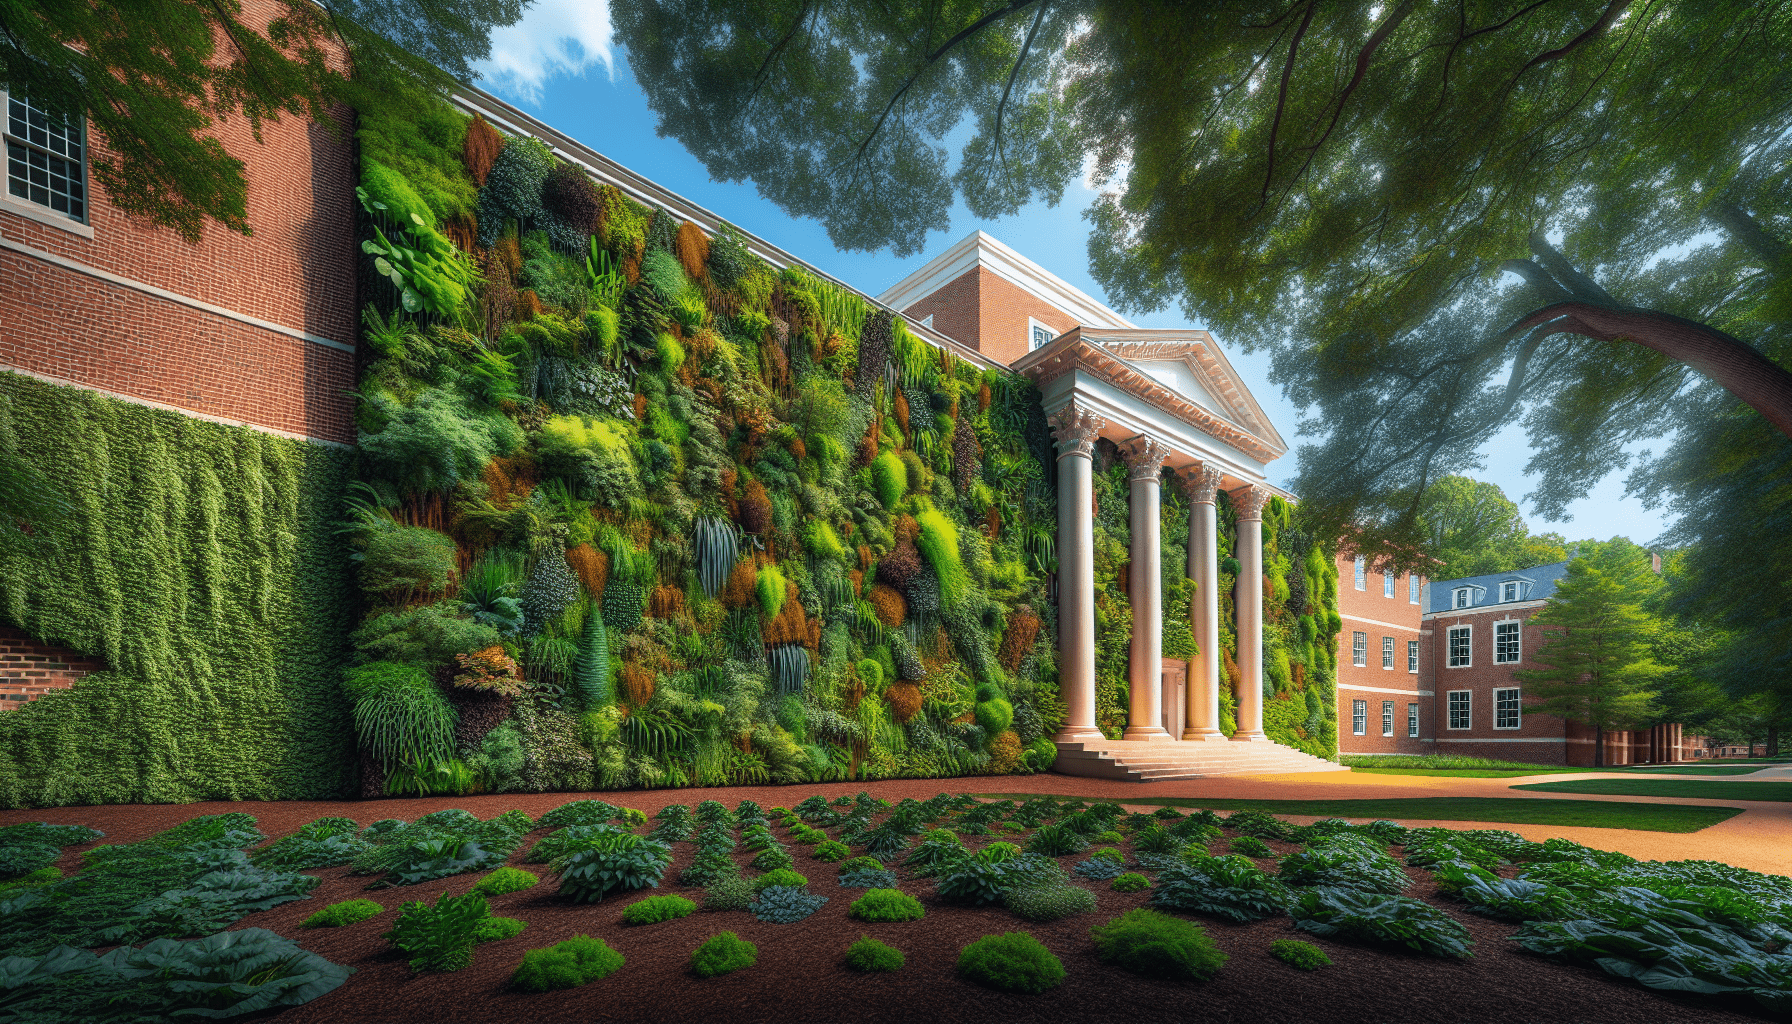 university-of-virginia-3d-prints-living-soil-walls-that-sprout-greenery-2 University of Virginia 3D-prints living soil walls that sprout greenery